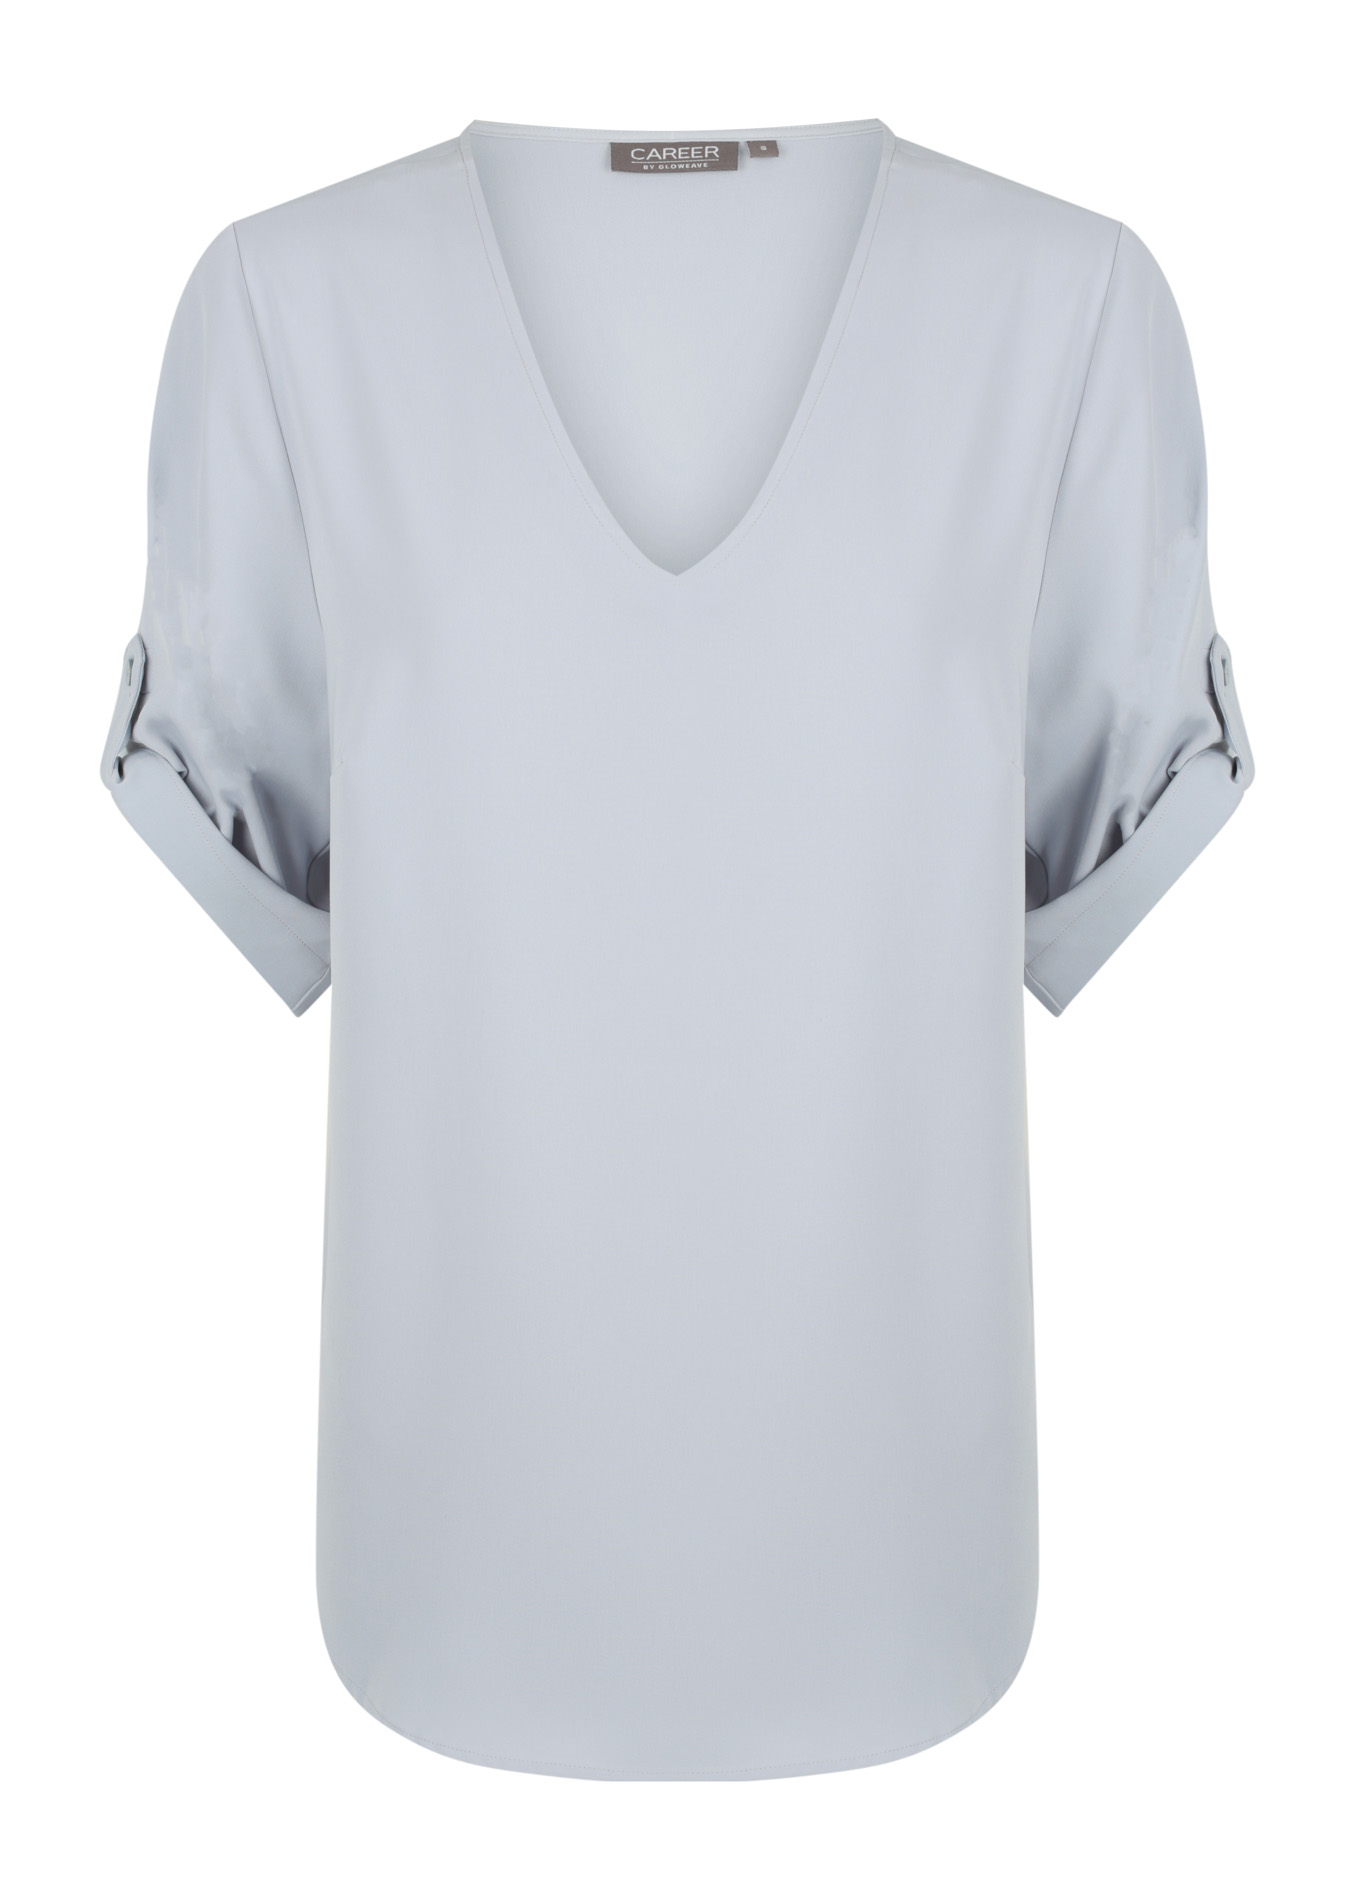 Reece Half Sleeve V-Neck Top - Silver - Uniform Edit